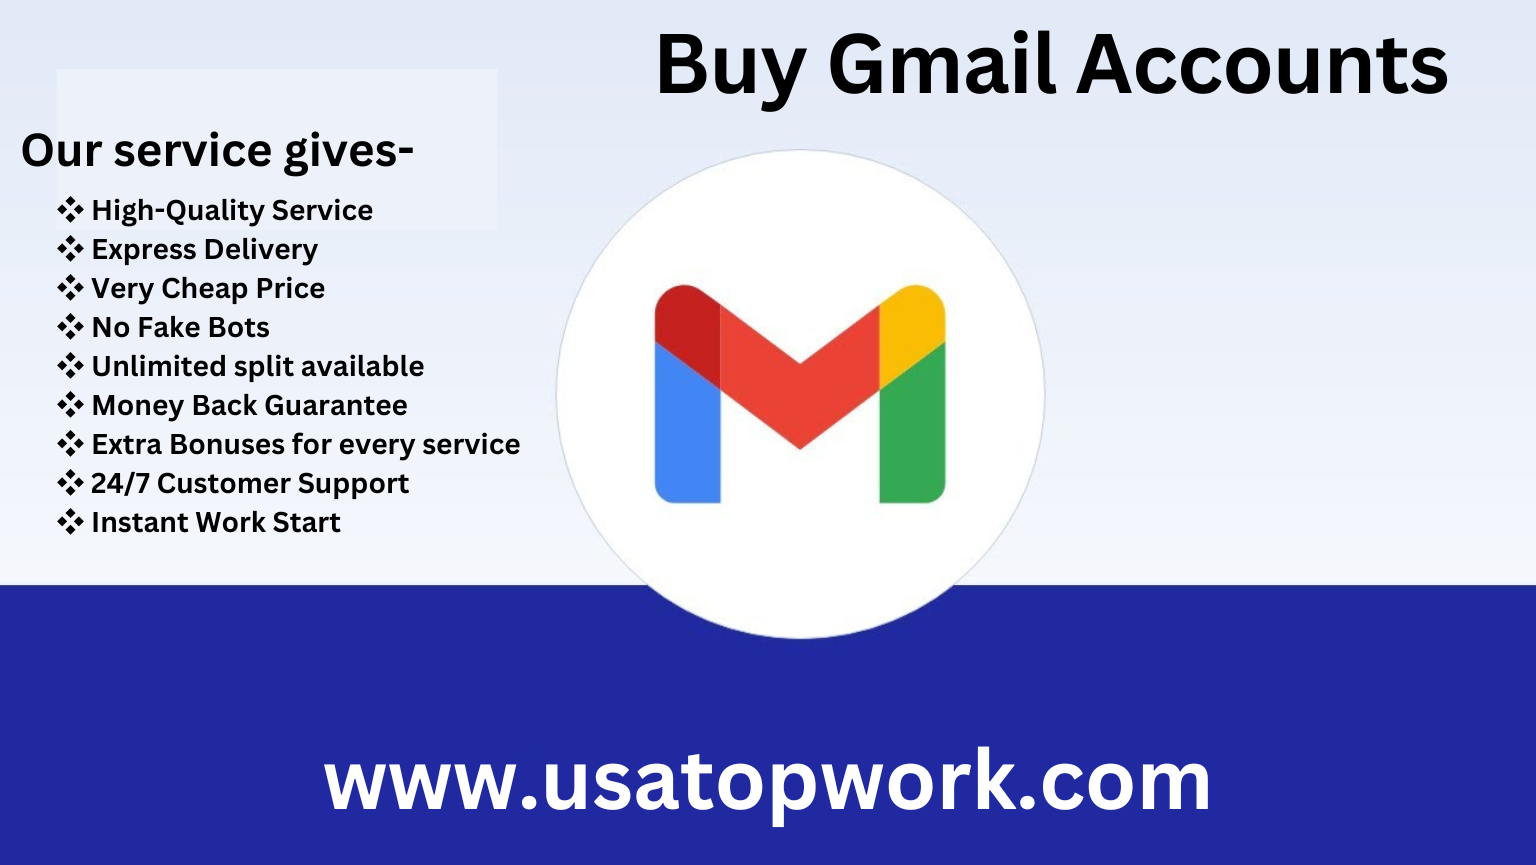 Buy Gmail Accounts
